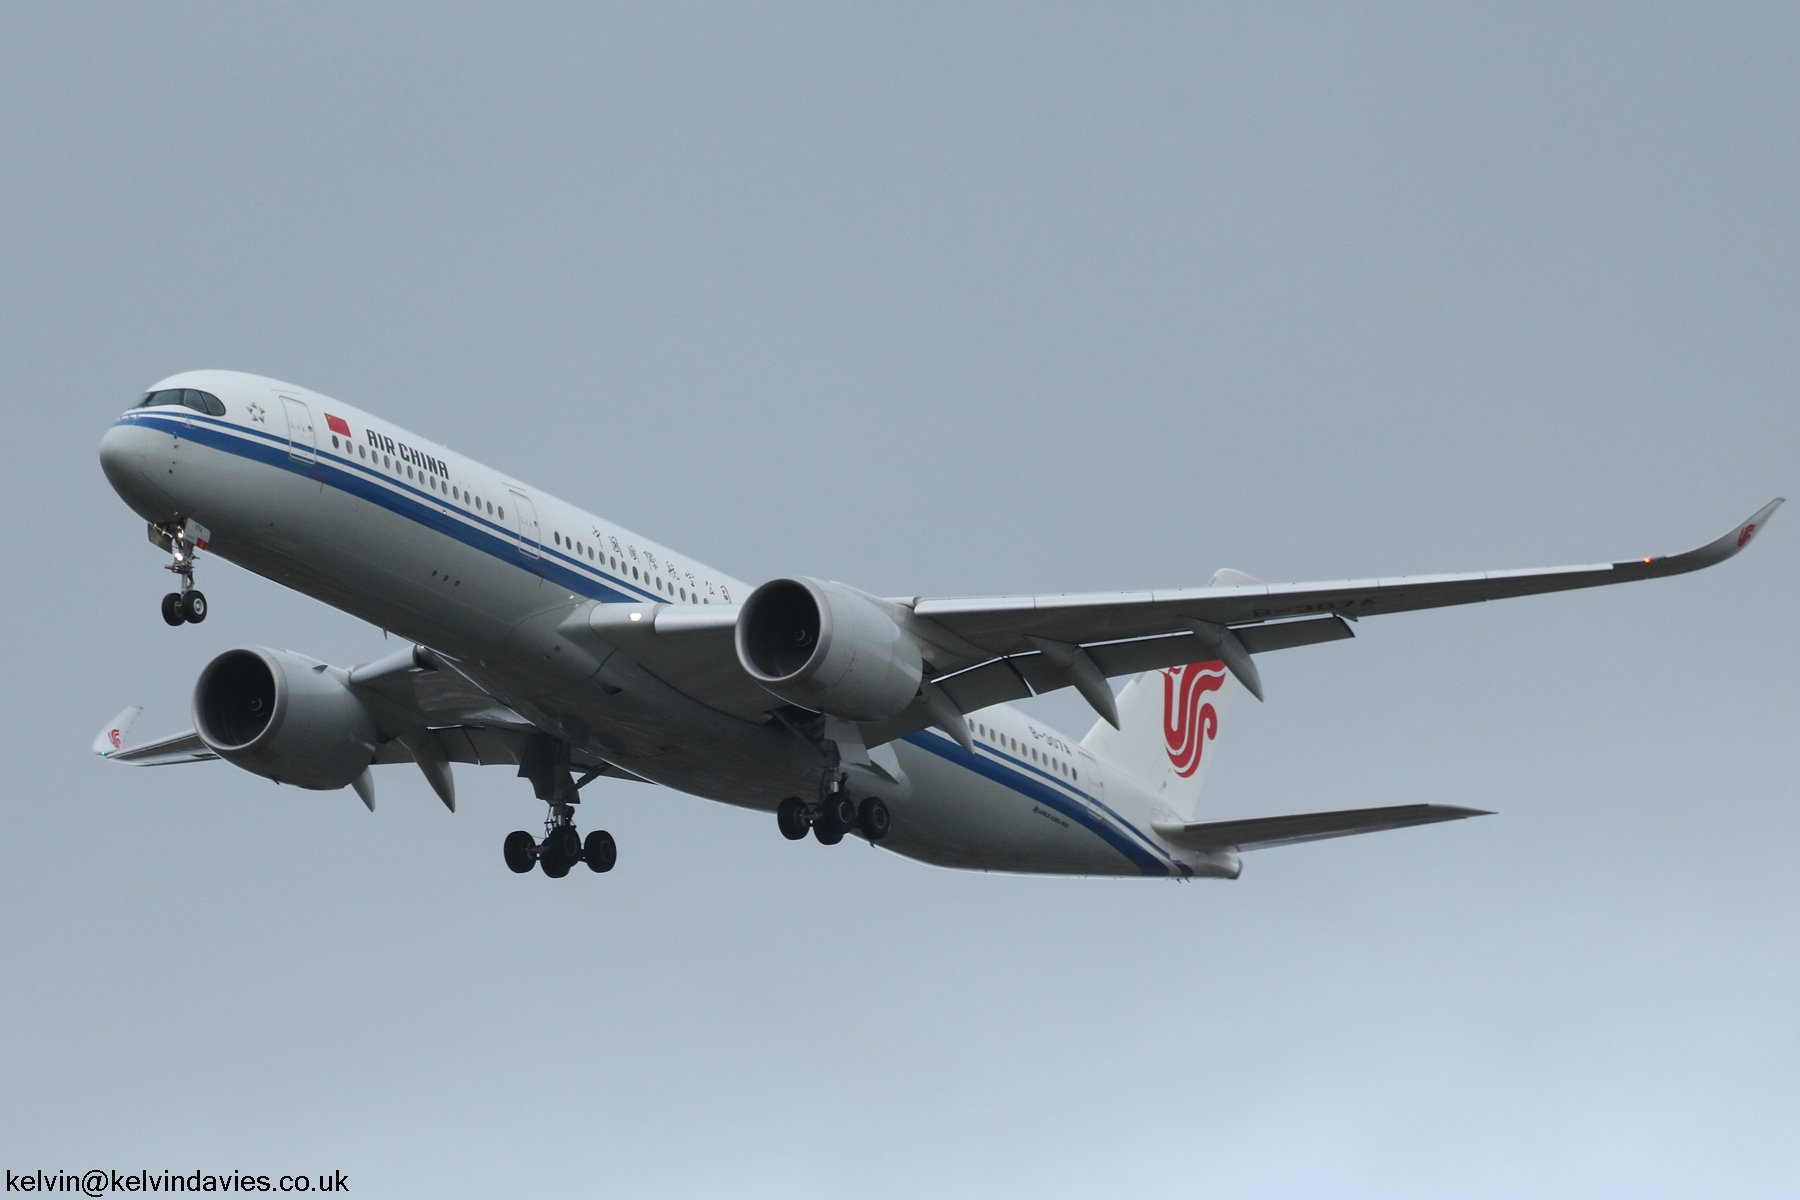 Air China A350 B-307A